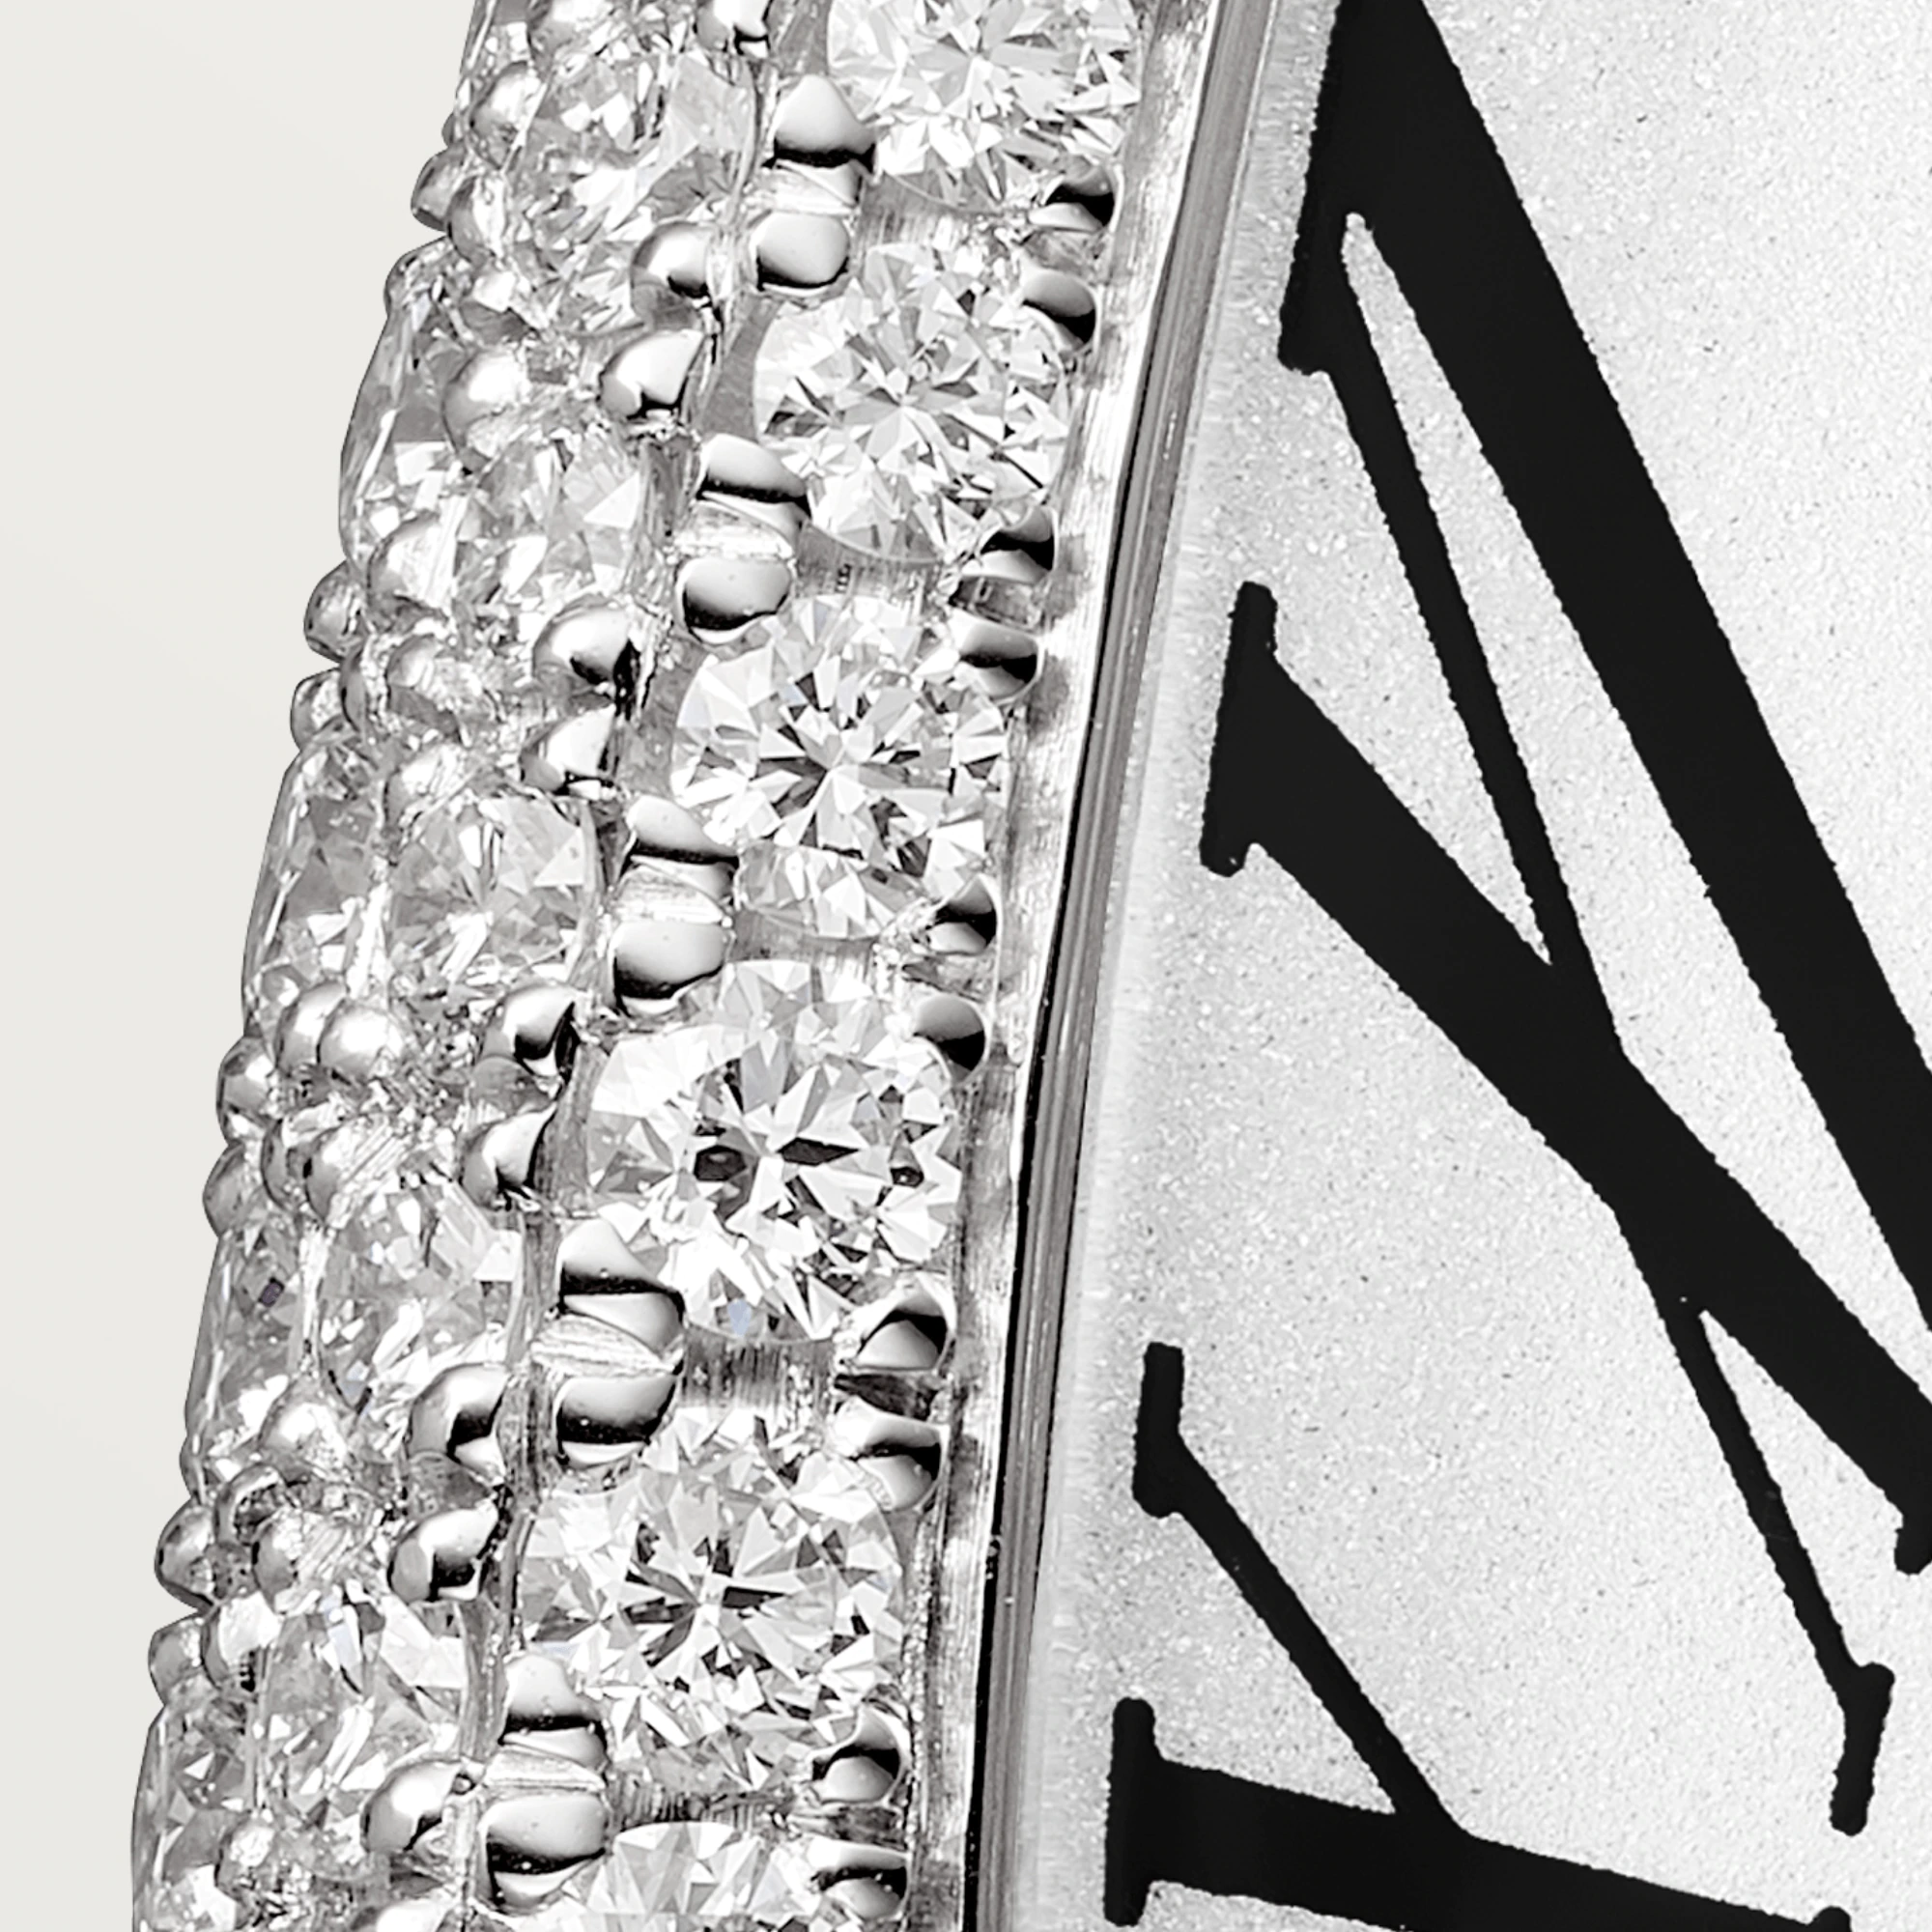 Cartier Baignoire 18K White Gold & Diamonds Ladies Watch